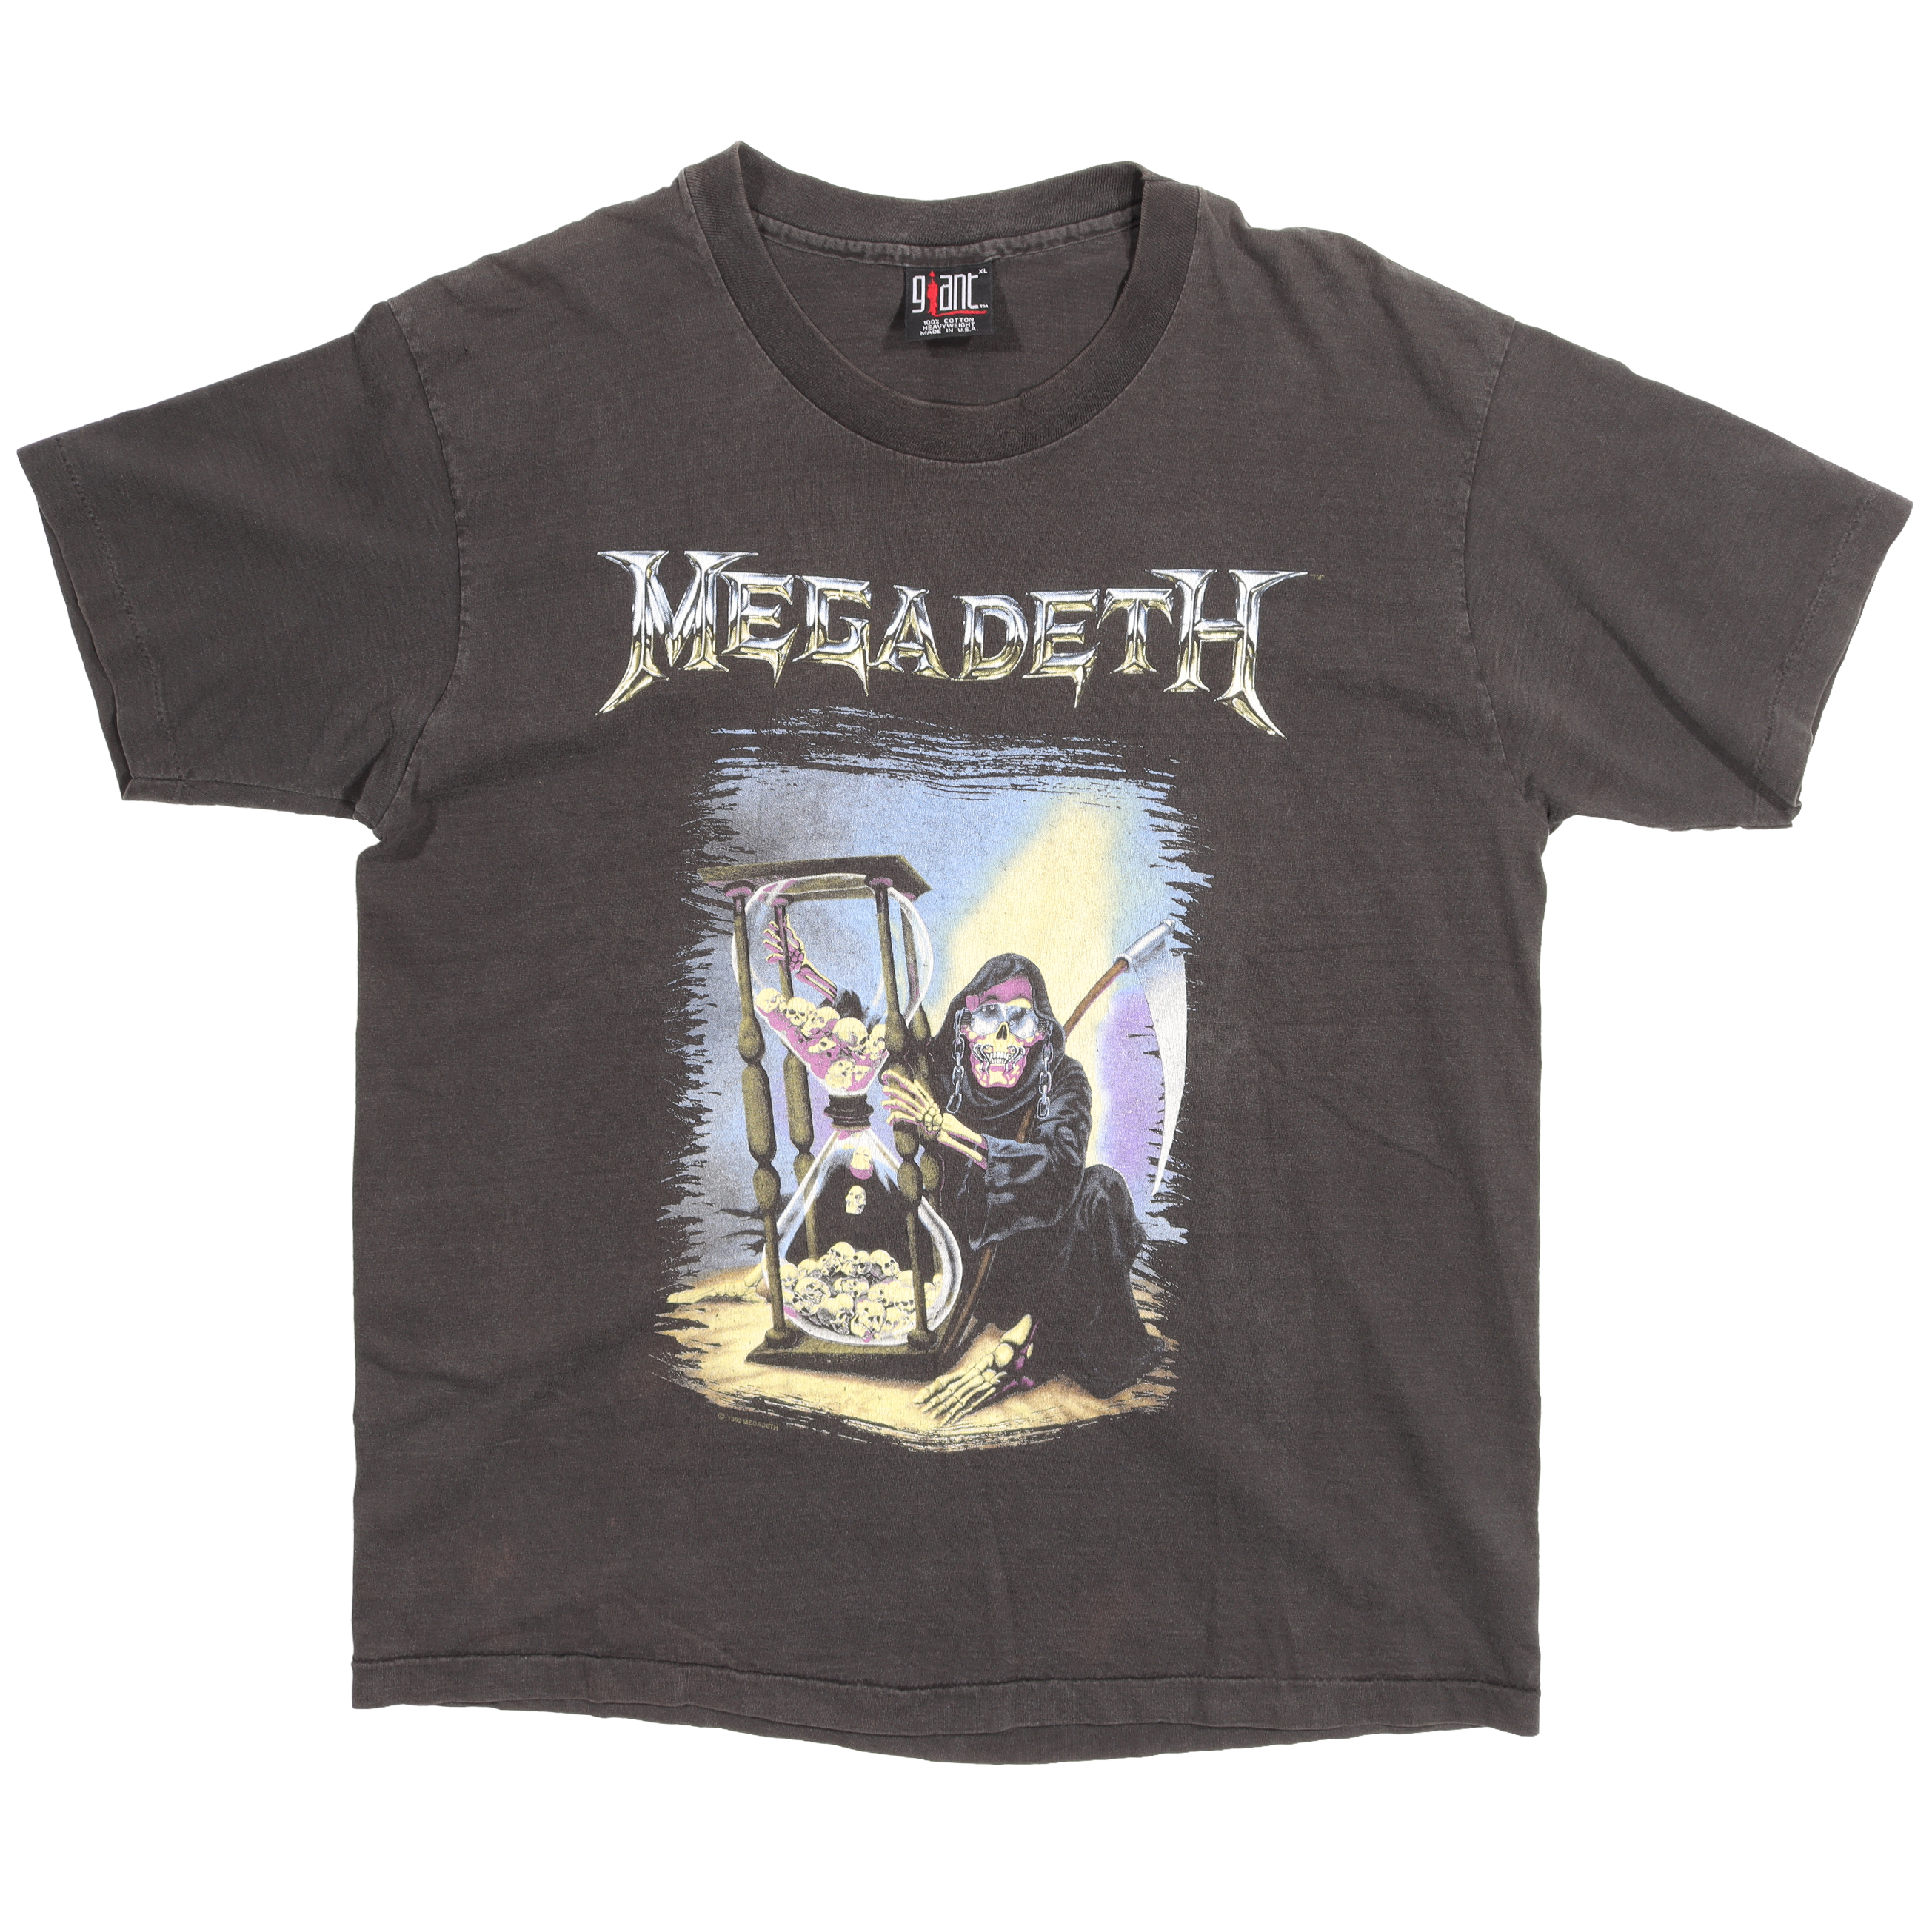 1992 Megadeath Countdown to Extiction T-Shirt